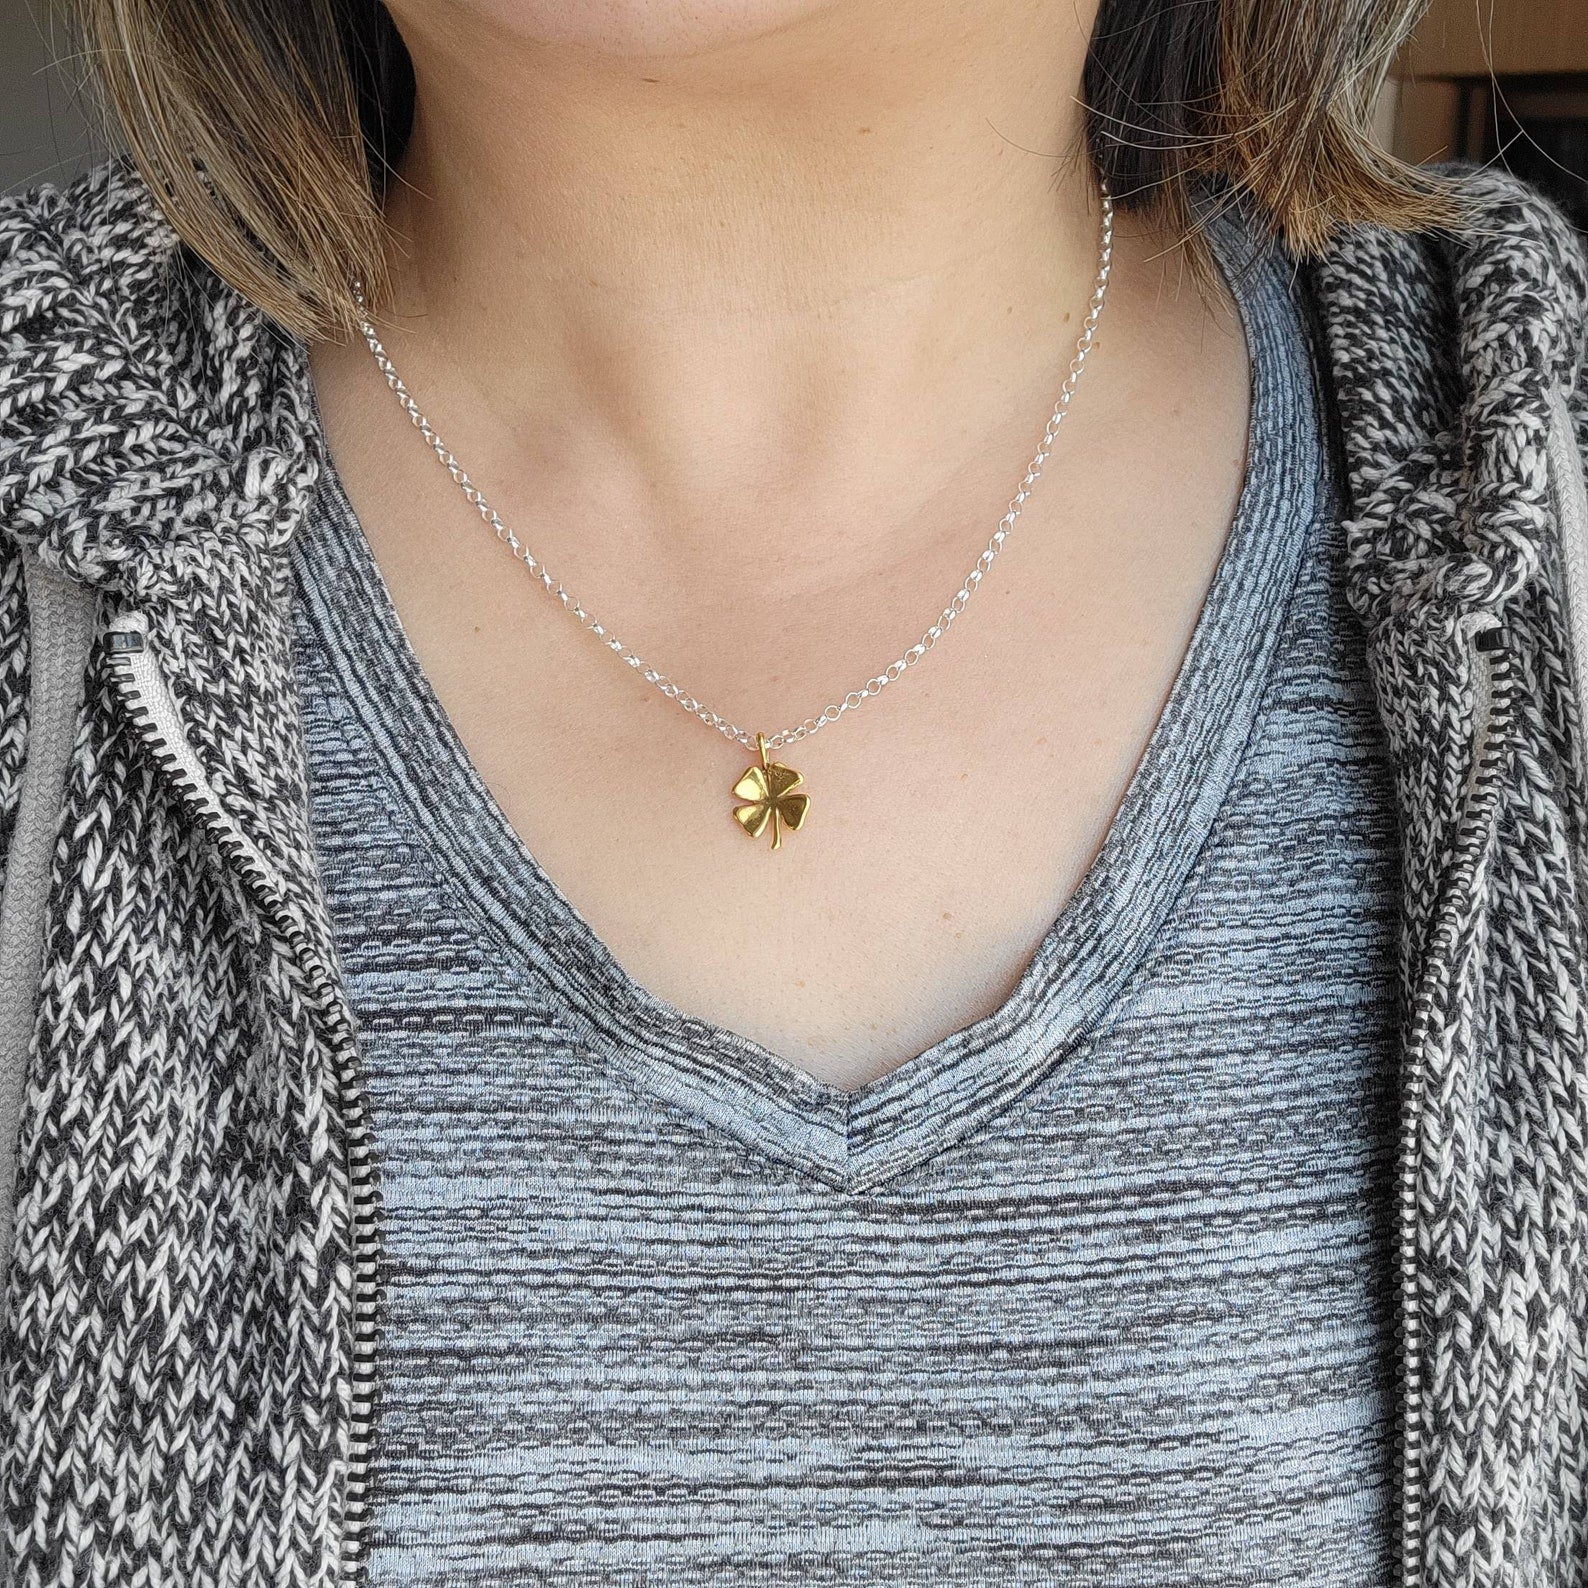 Gold clover charm pendant